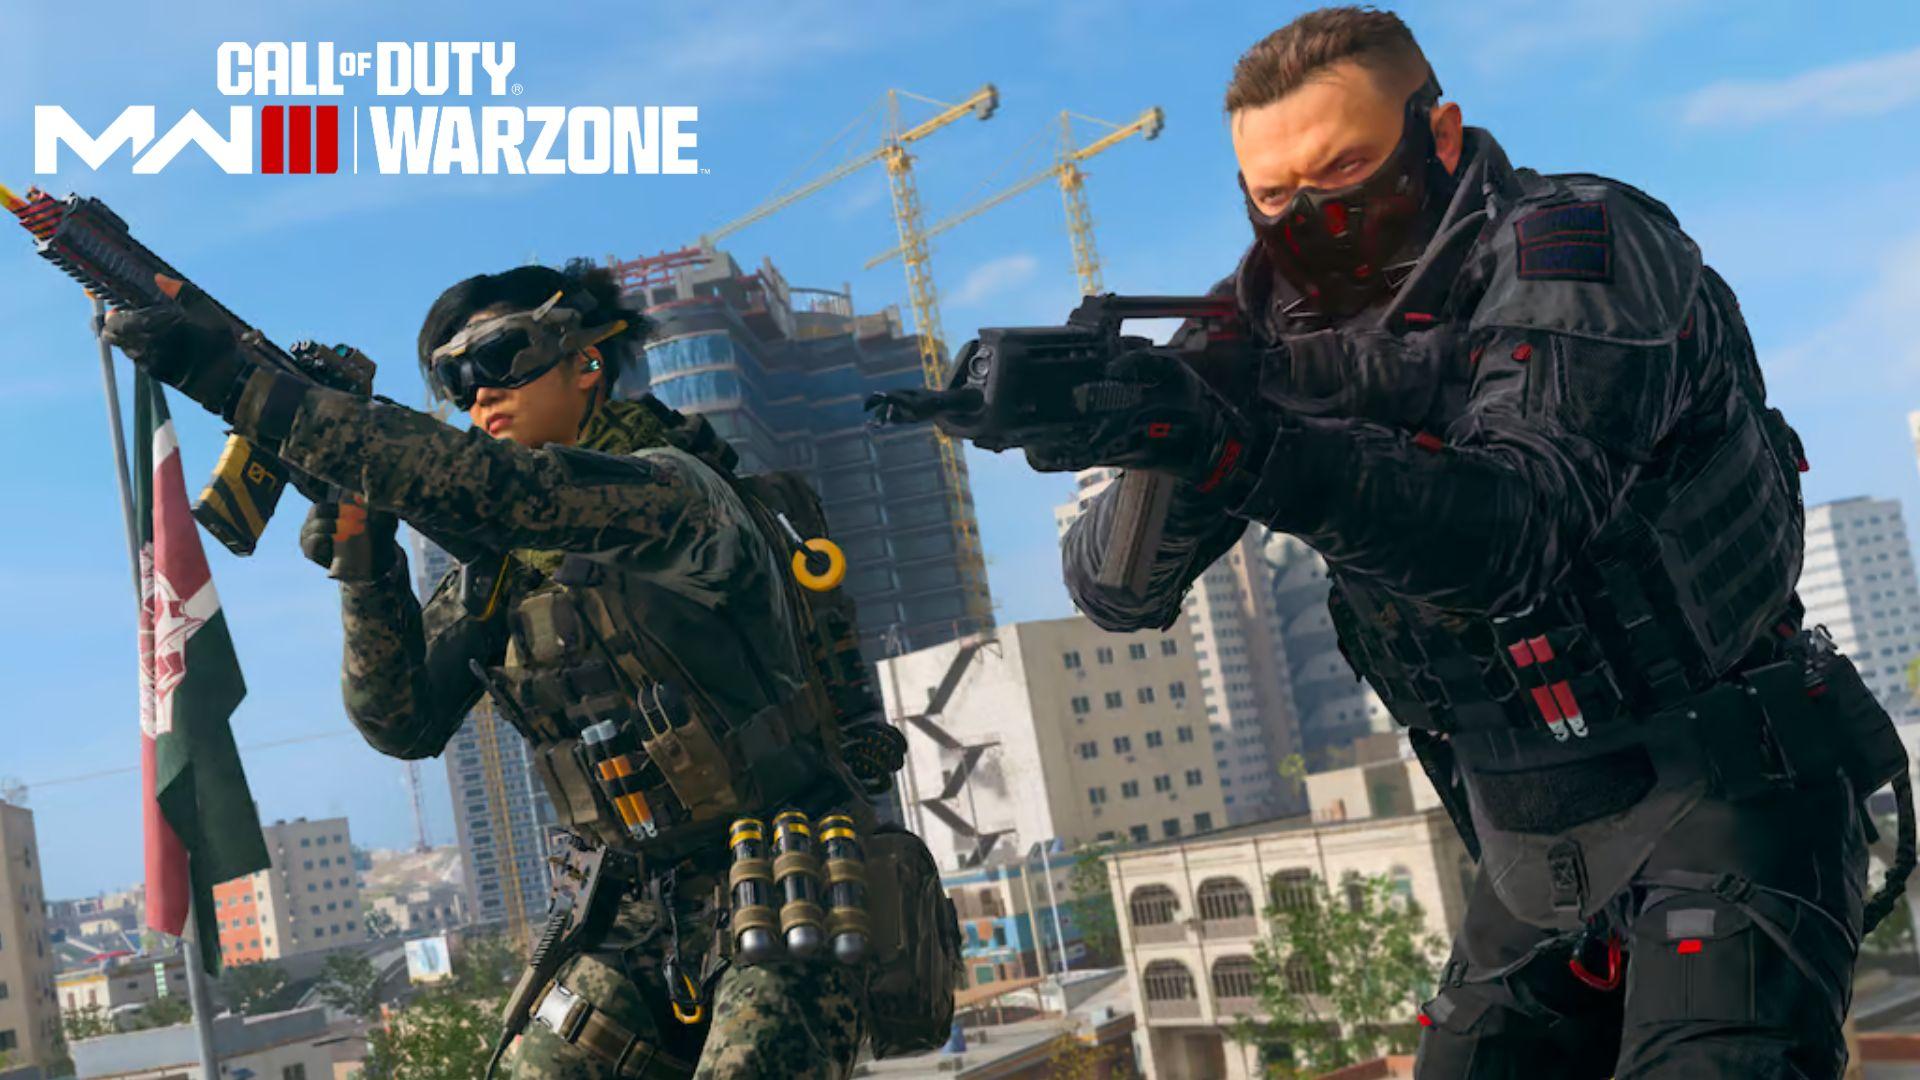 Call of Duty Modern Warfare 3 characters aiming guns with MW3 Warzone logo